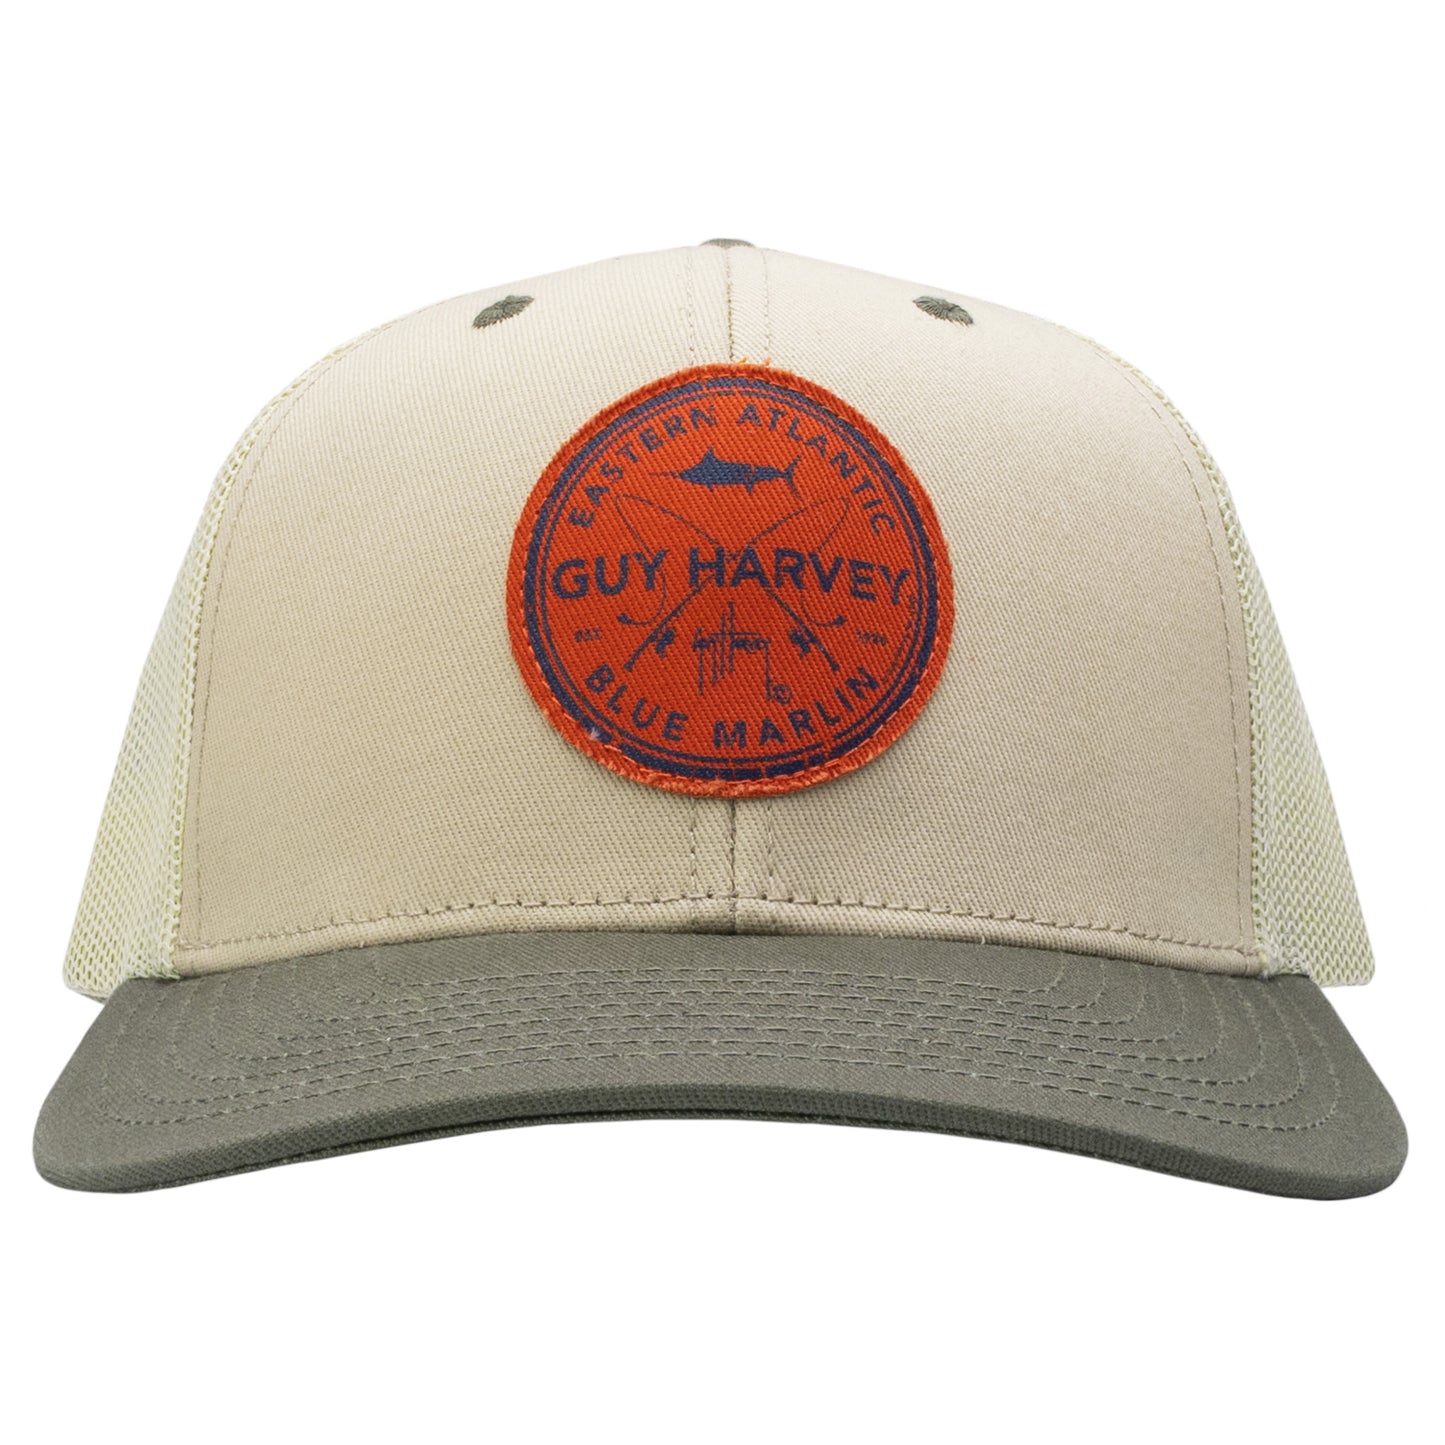 Guy Harvey Originals Embroidered Bucket Hat Fishing neck flap Marlin Fish  mesh